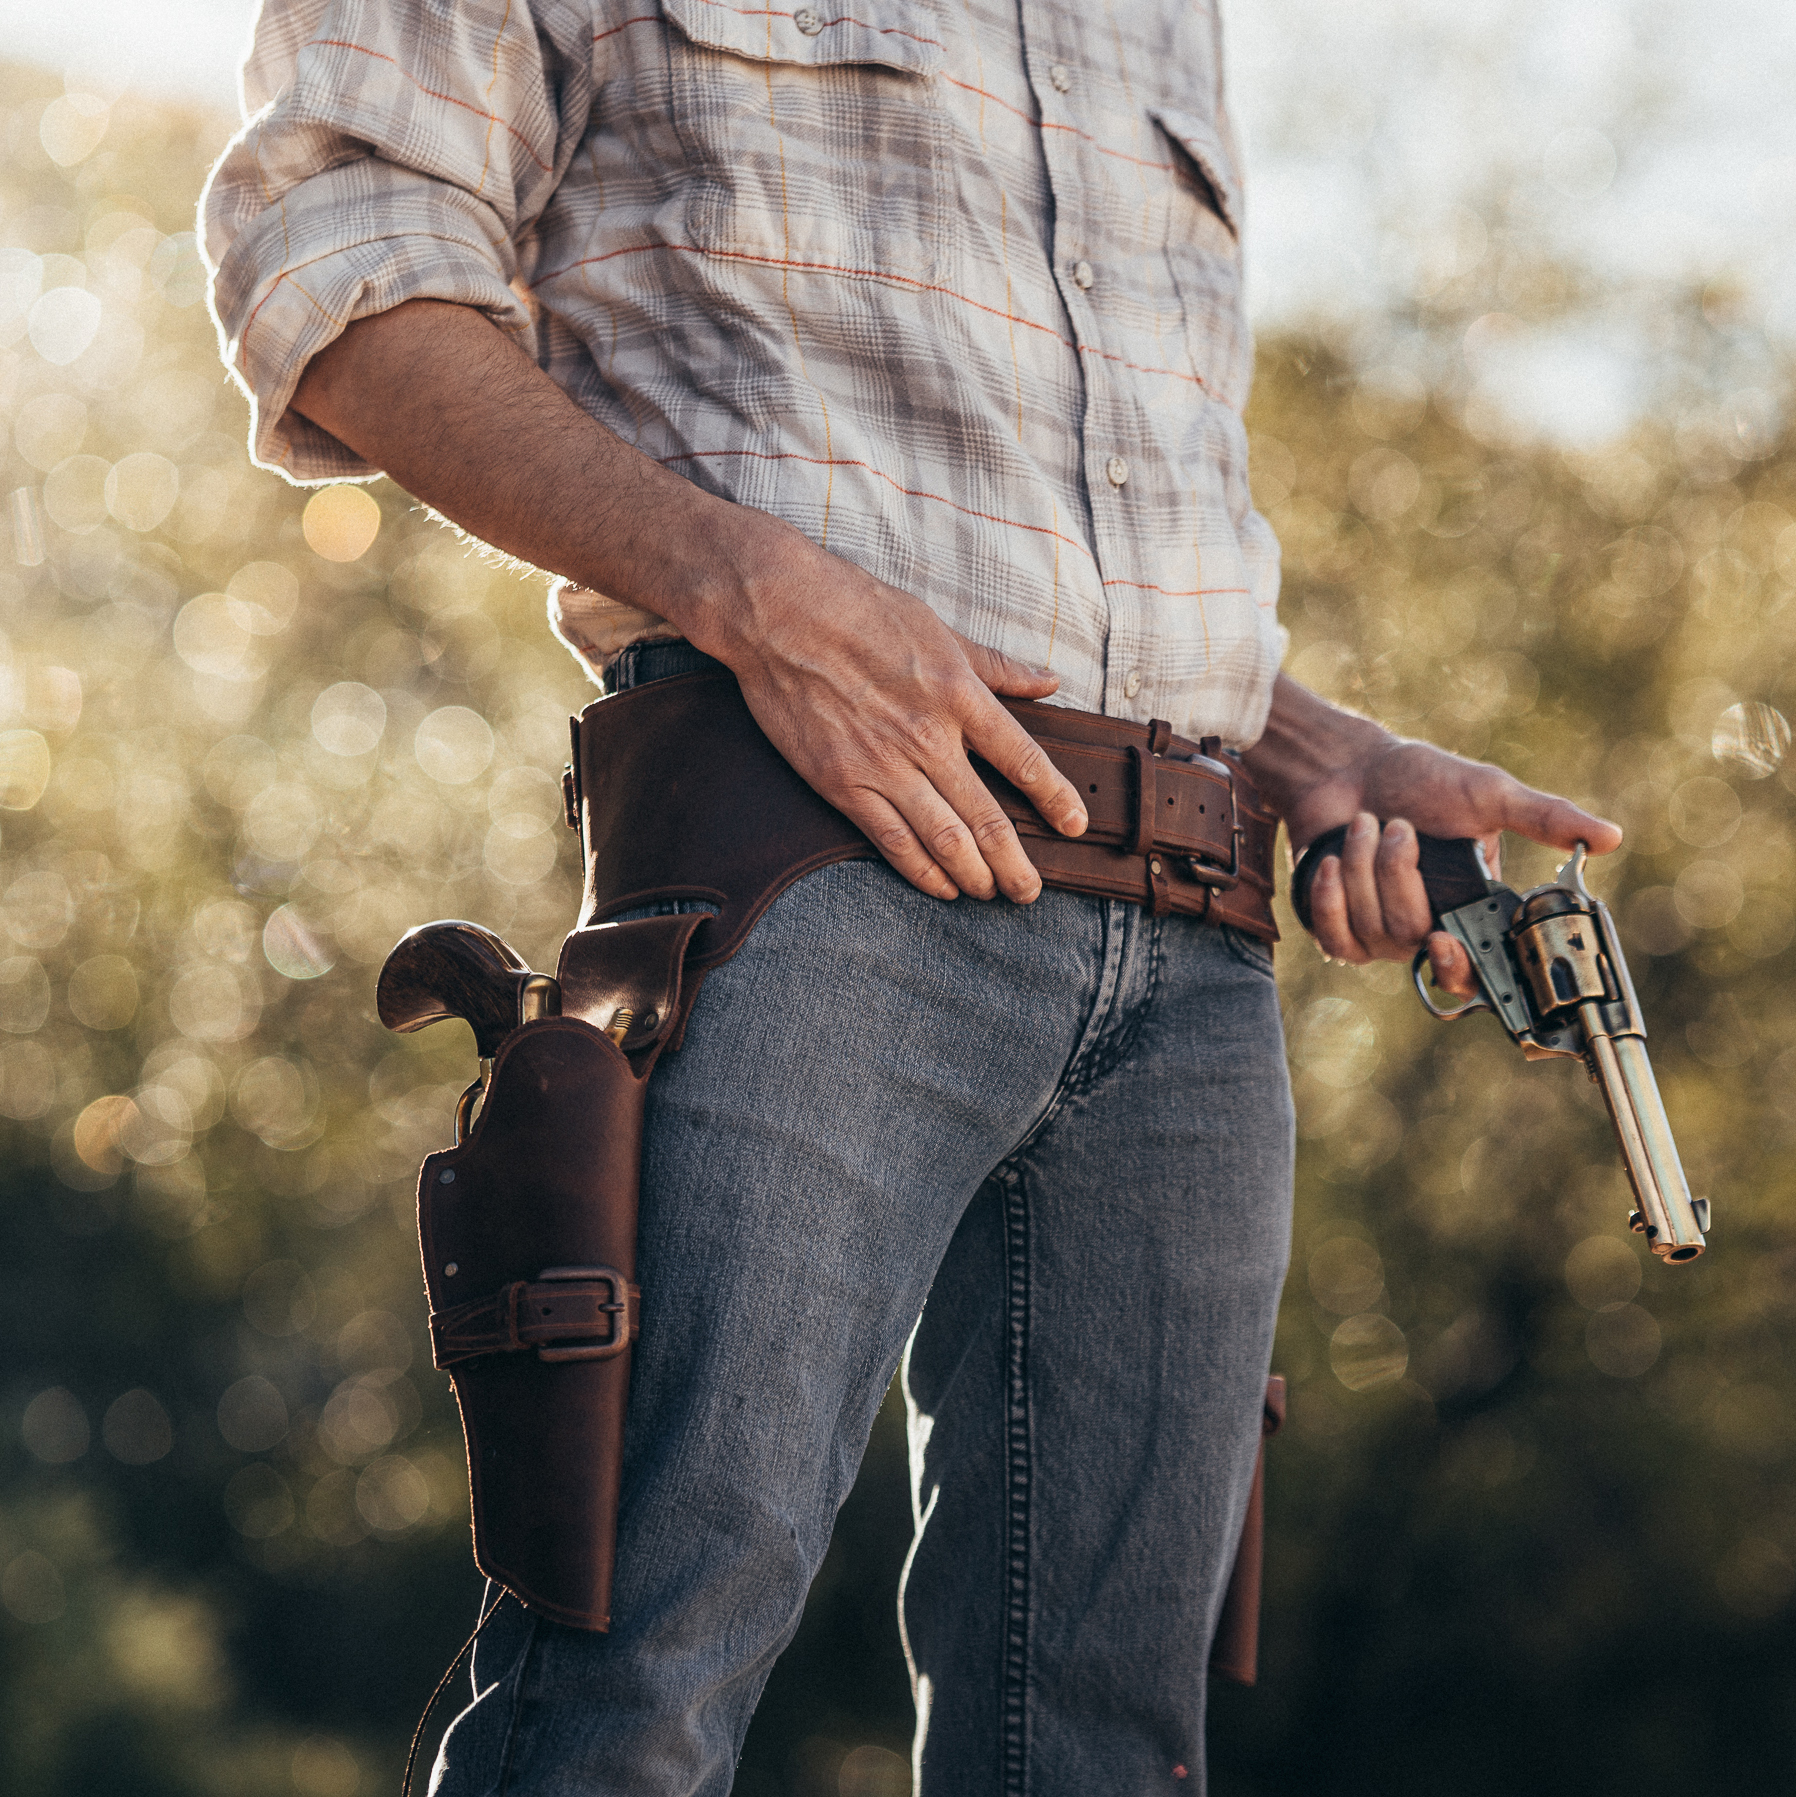 Bottom half of Cowboy wearing Winchester style bandolier holding Thunderer revolver.